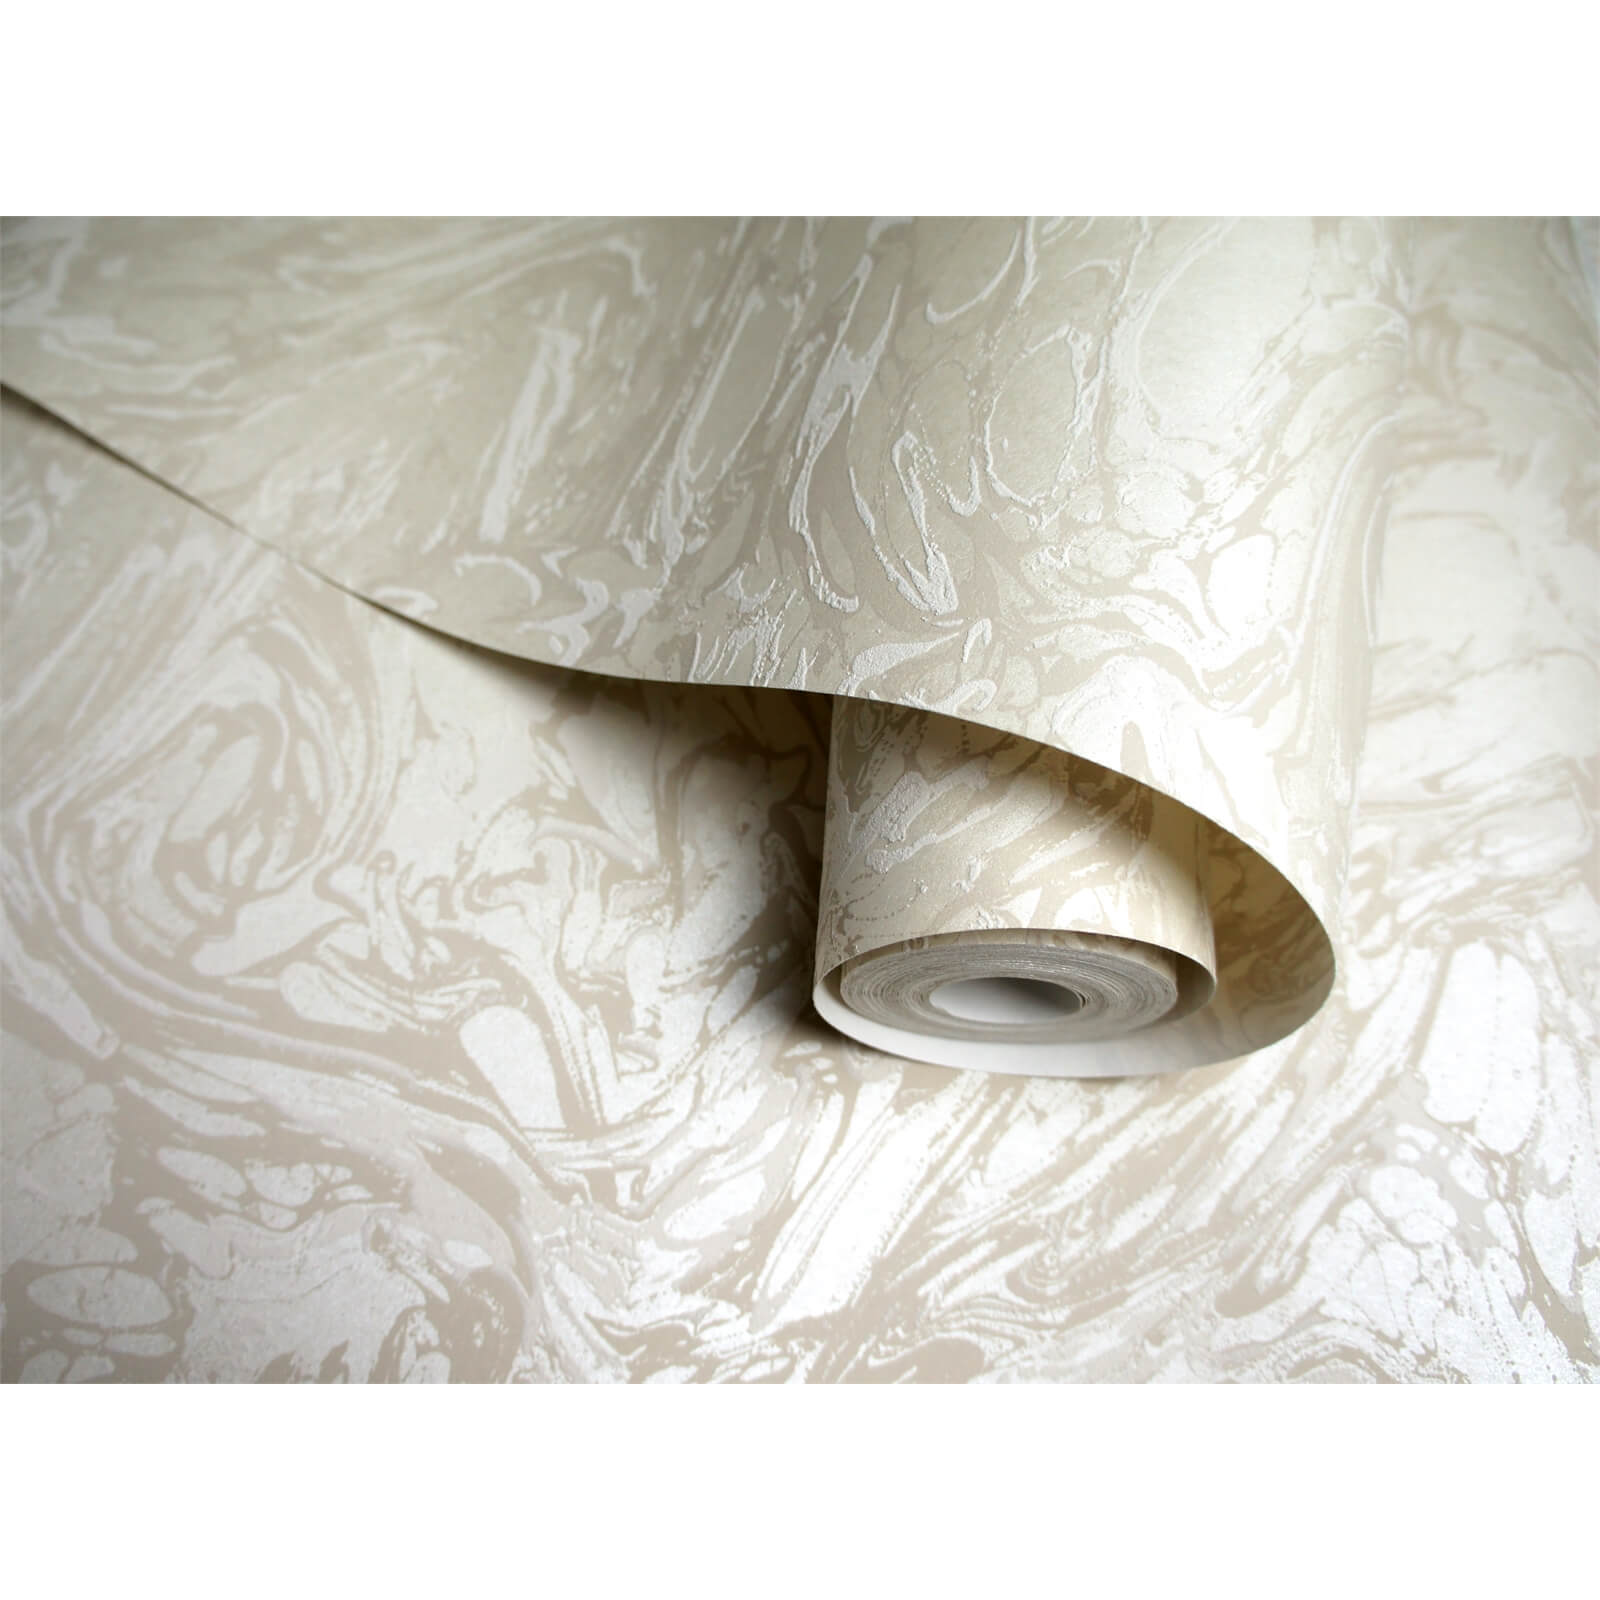 Holden Decor Coralito Marble Effect Textured Metallic Cream Wallpaper